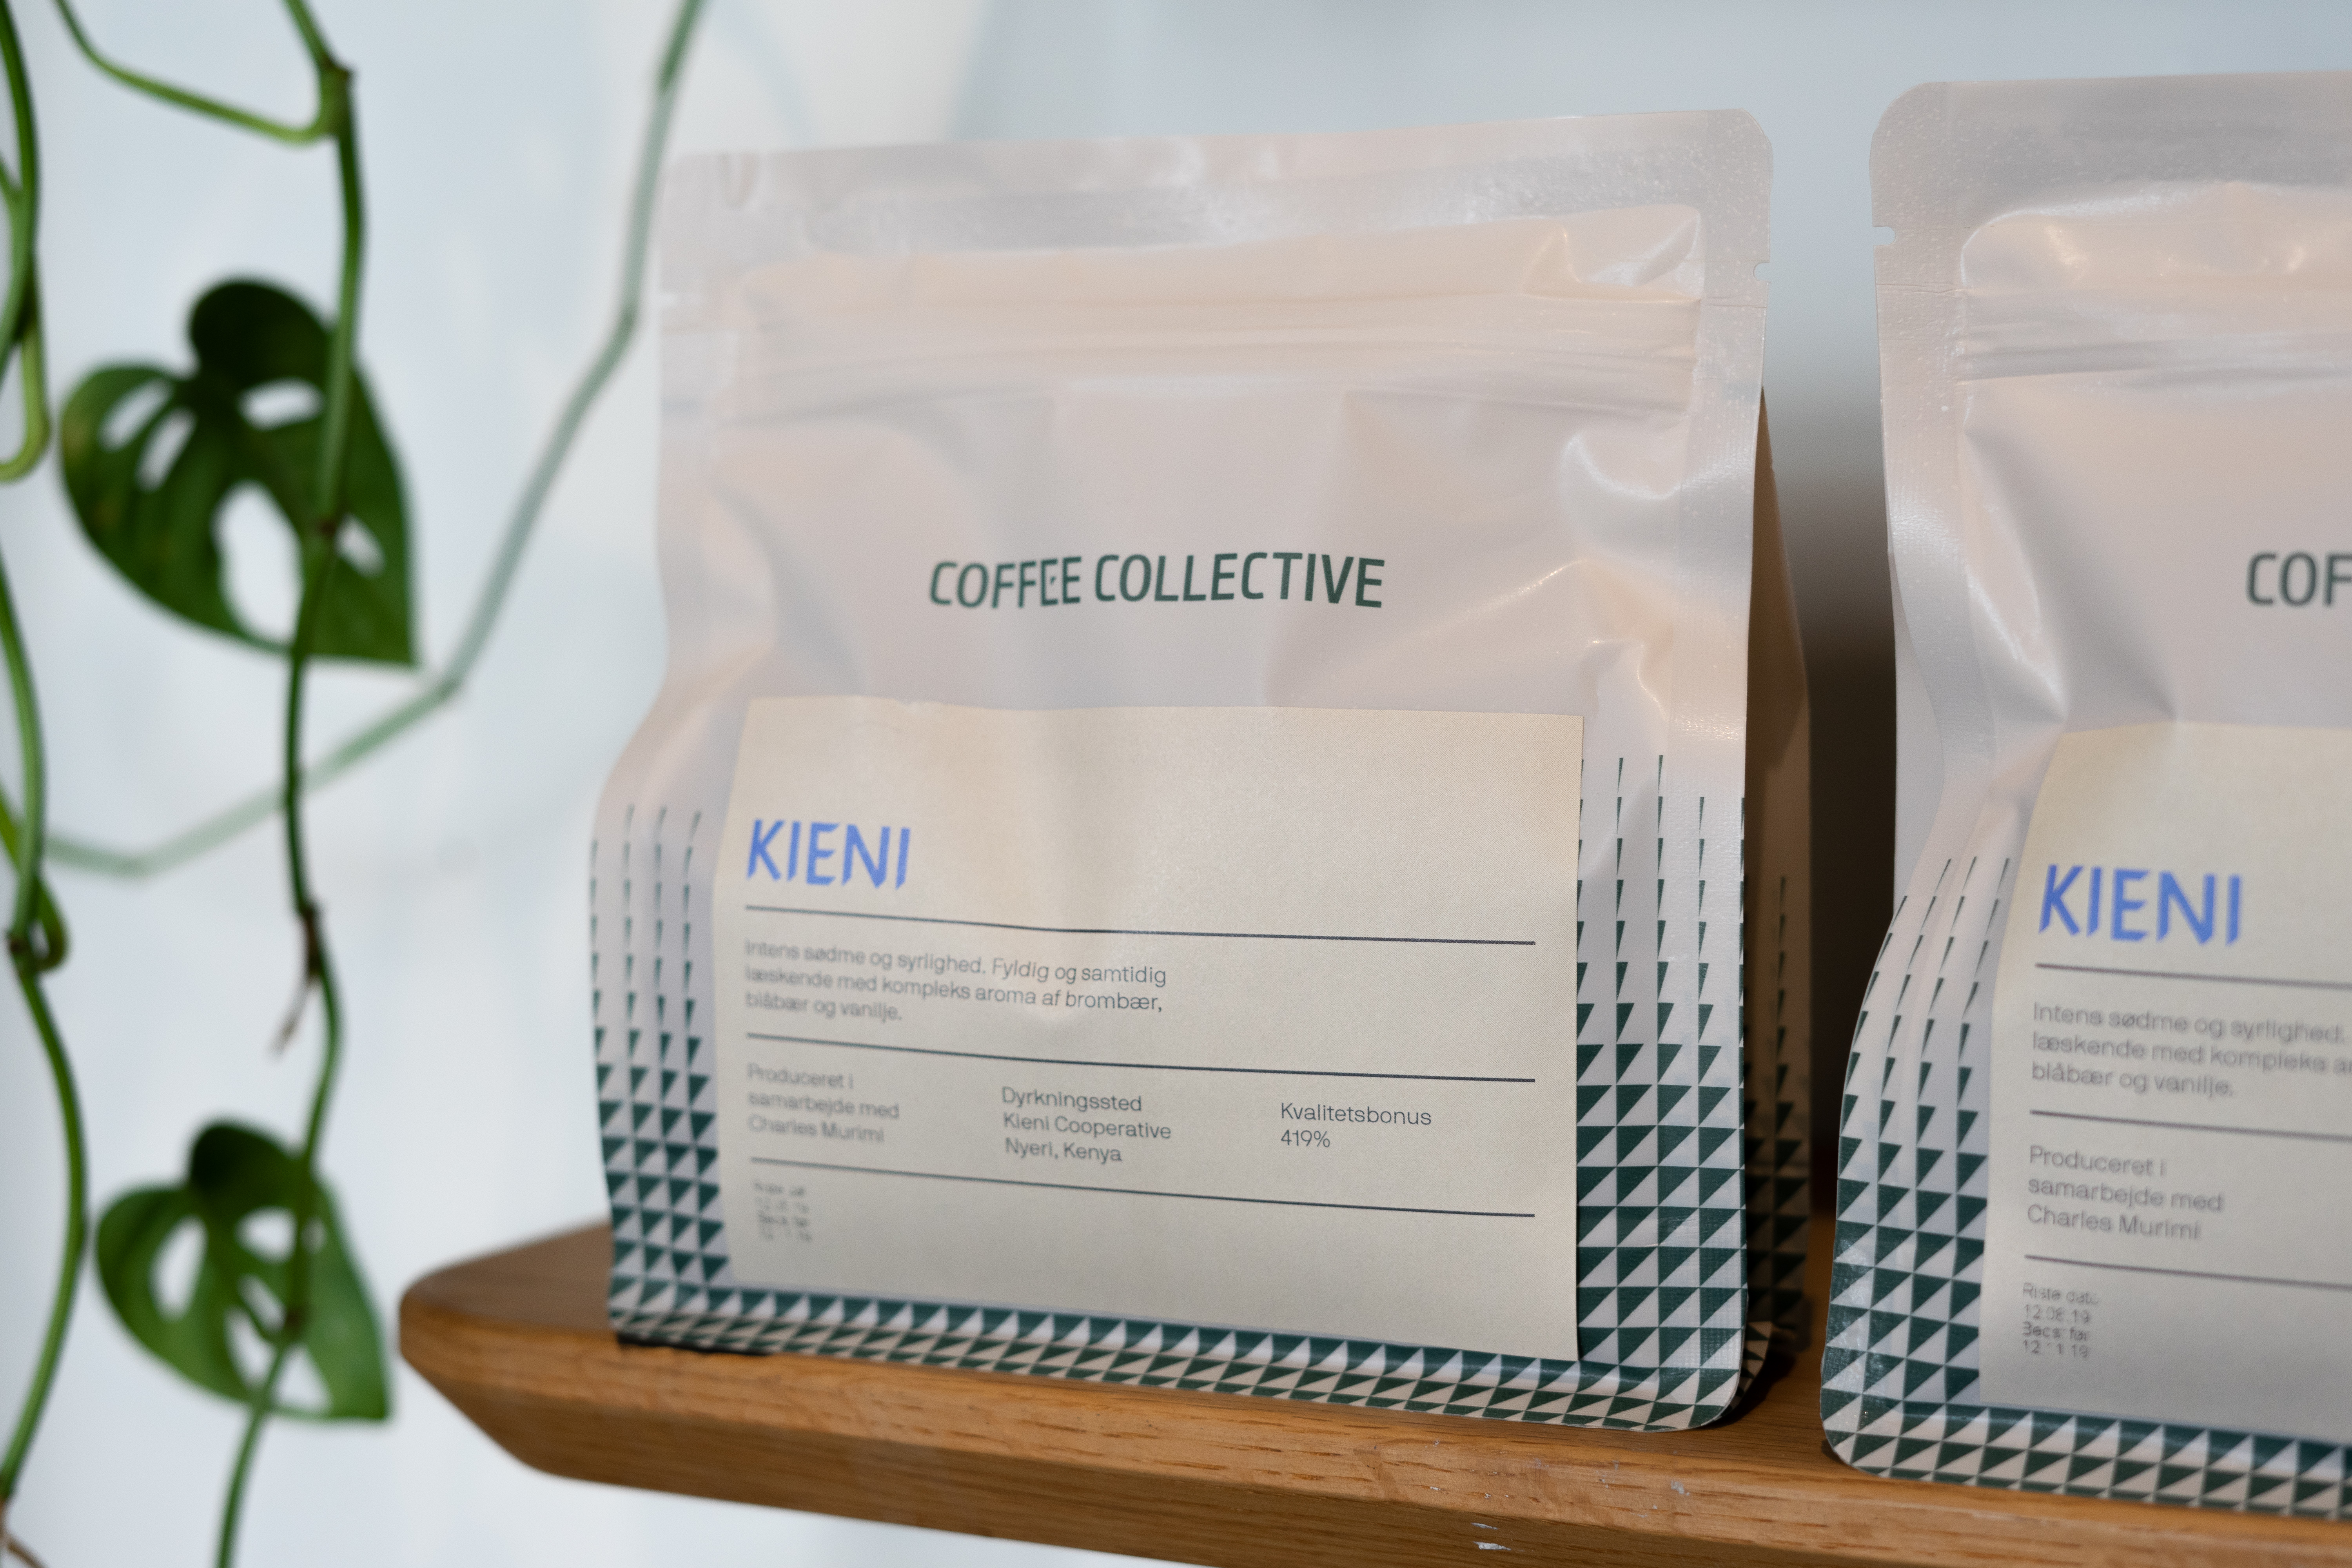 The Quality Bonus on the Kieni coffee bag